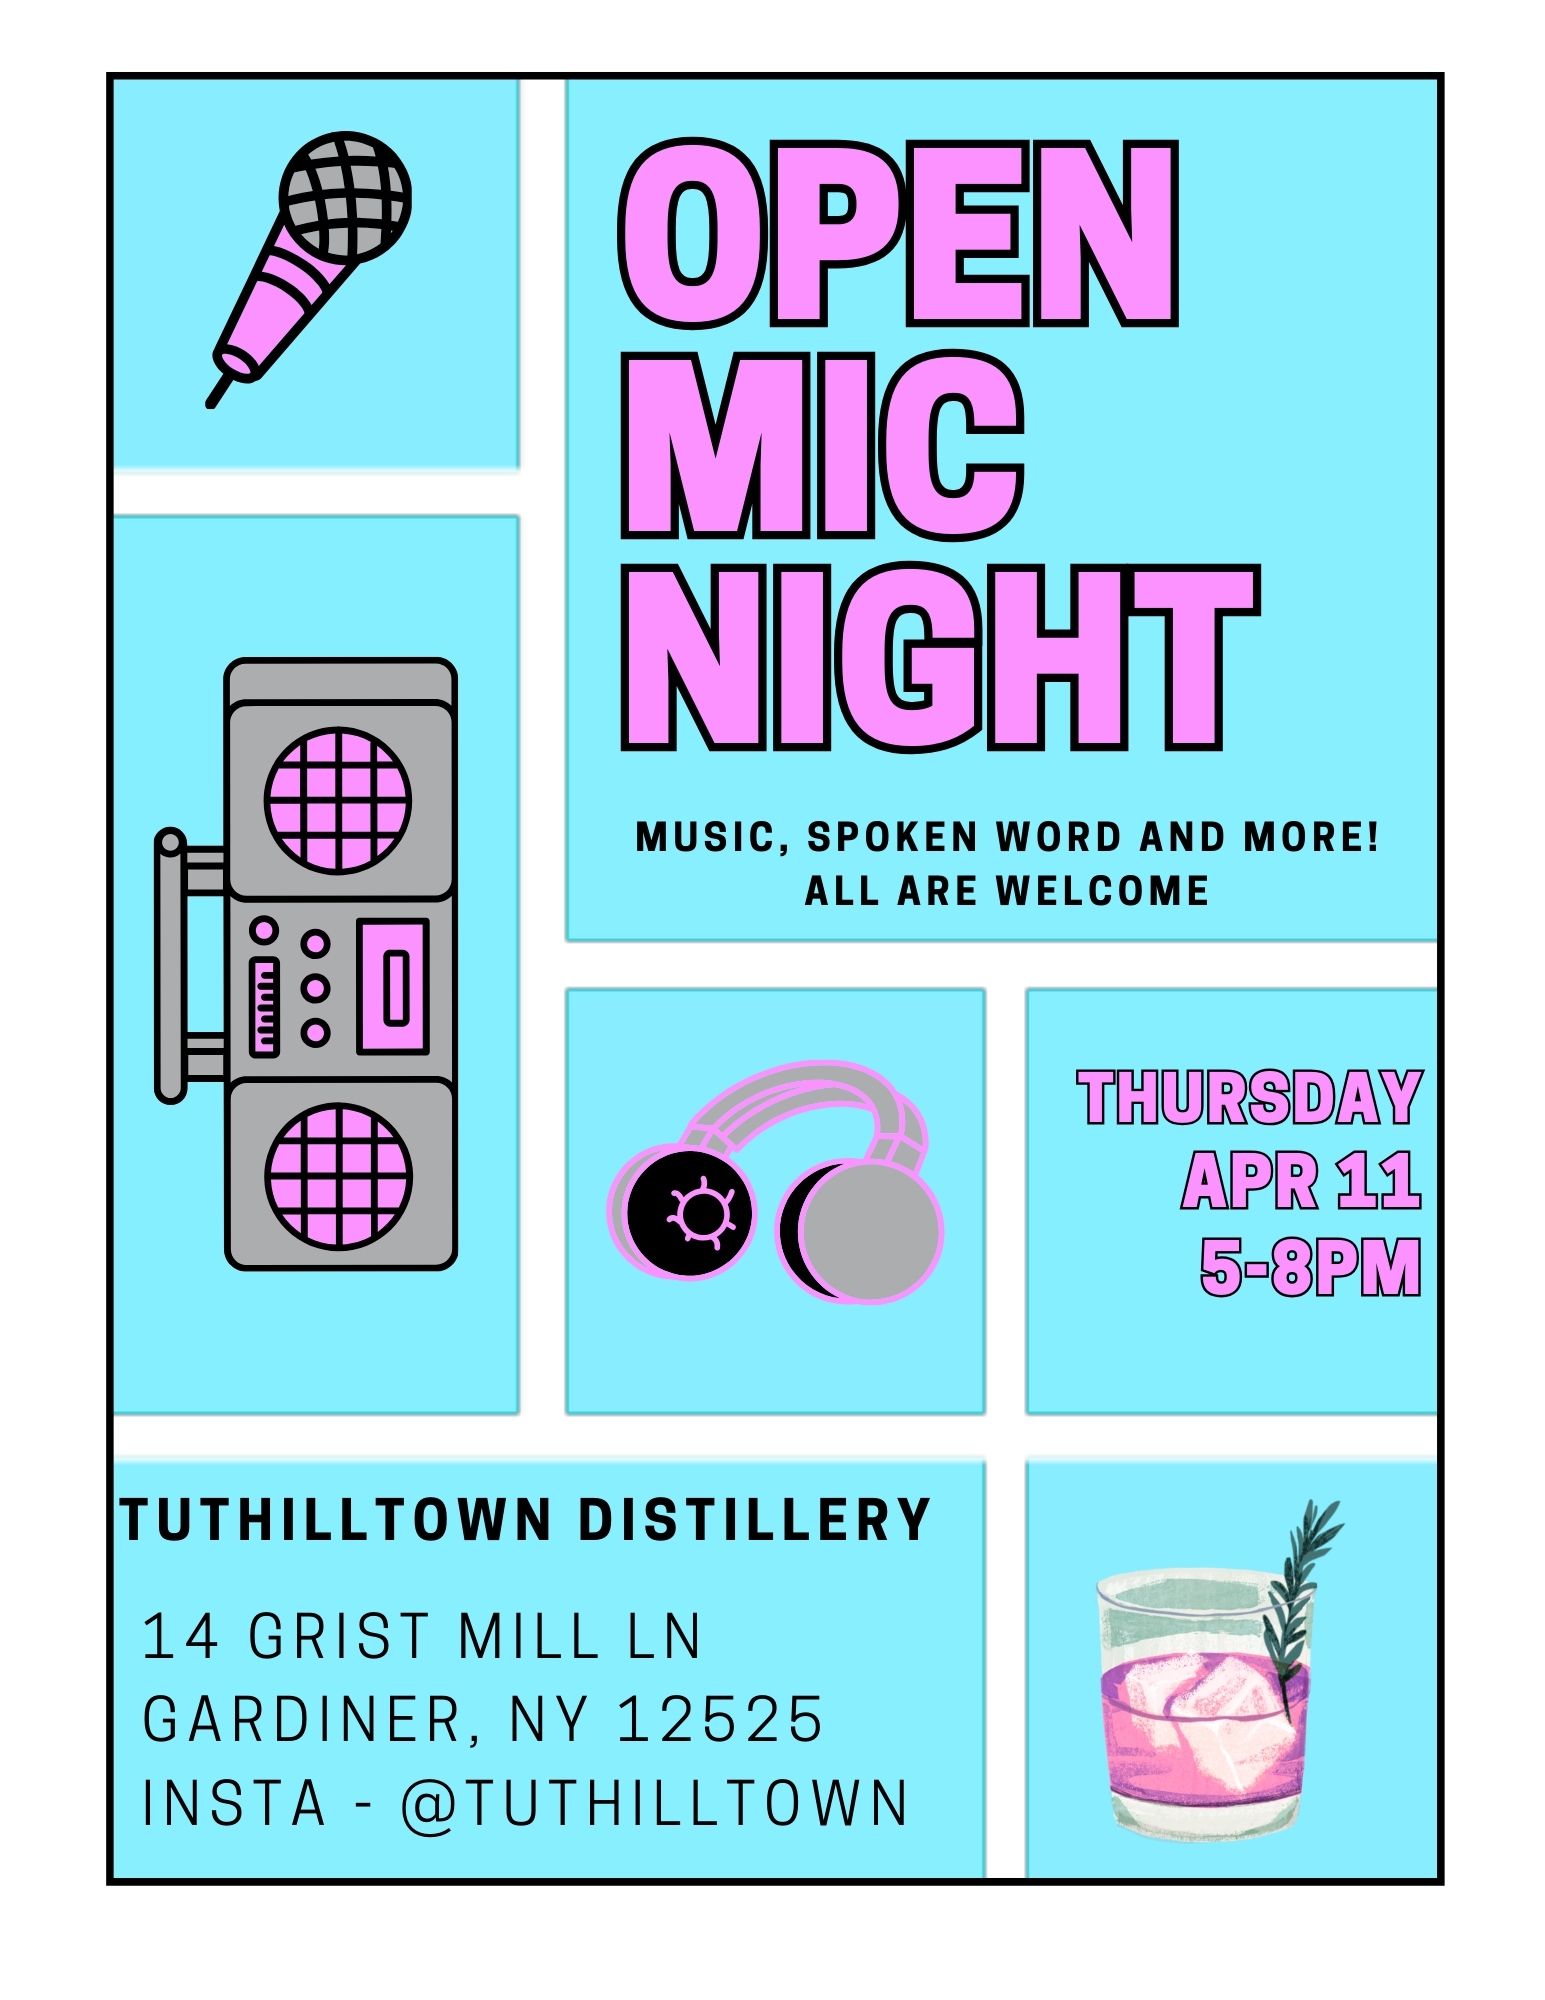 Open Mic Night event flyer